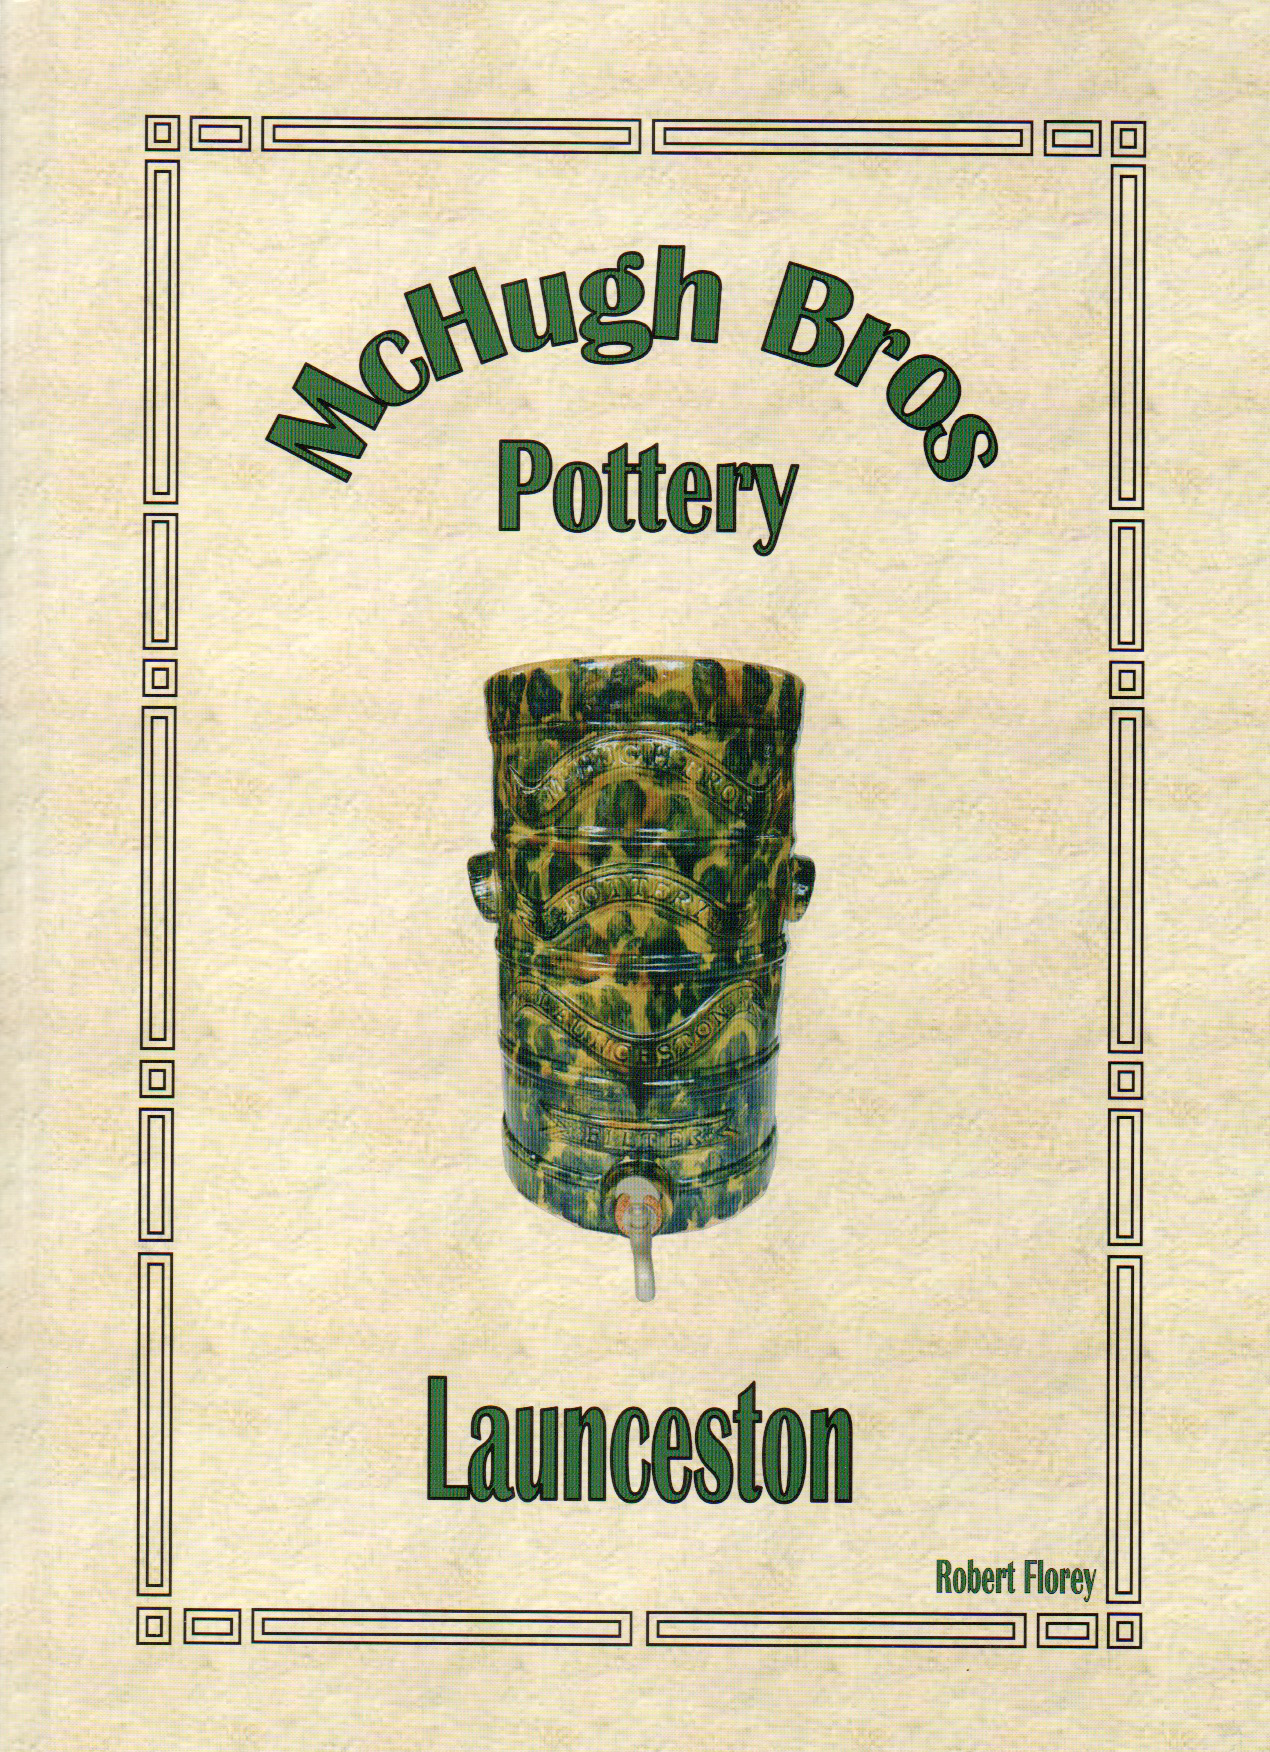 McHugh Bros Pottery